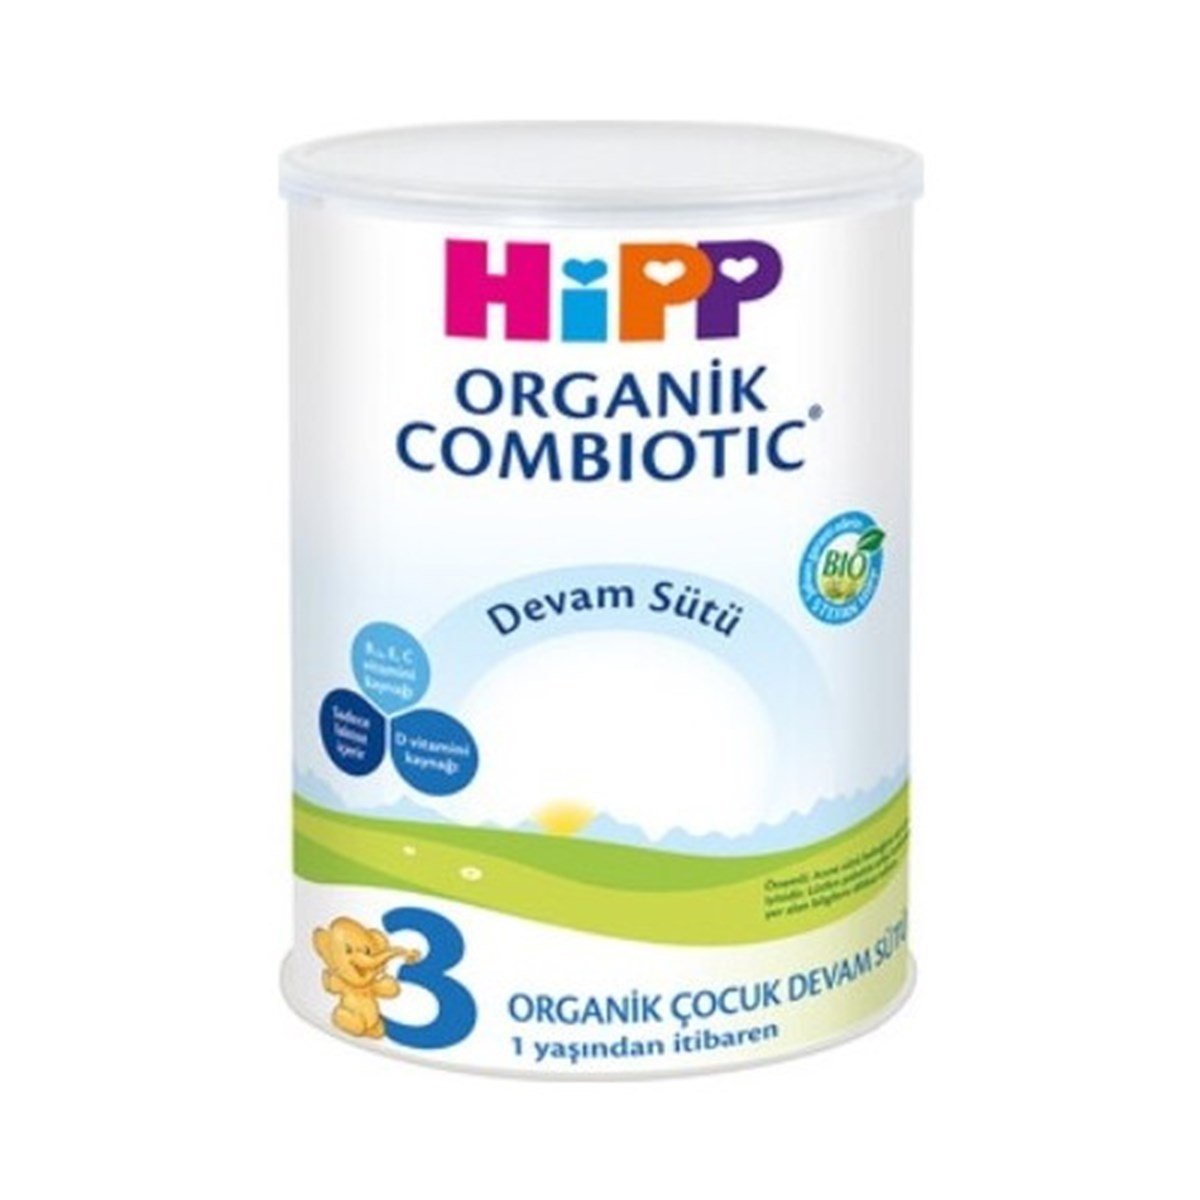 Hipp 3 Organic Combiotic Baby Follow-on Milk 350 g